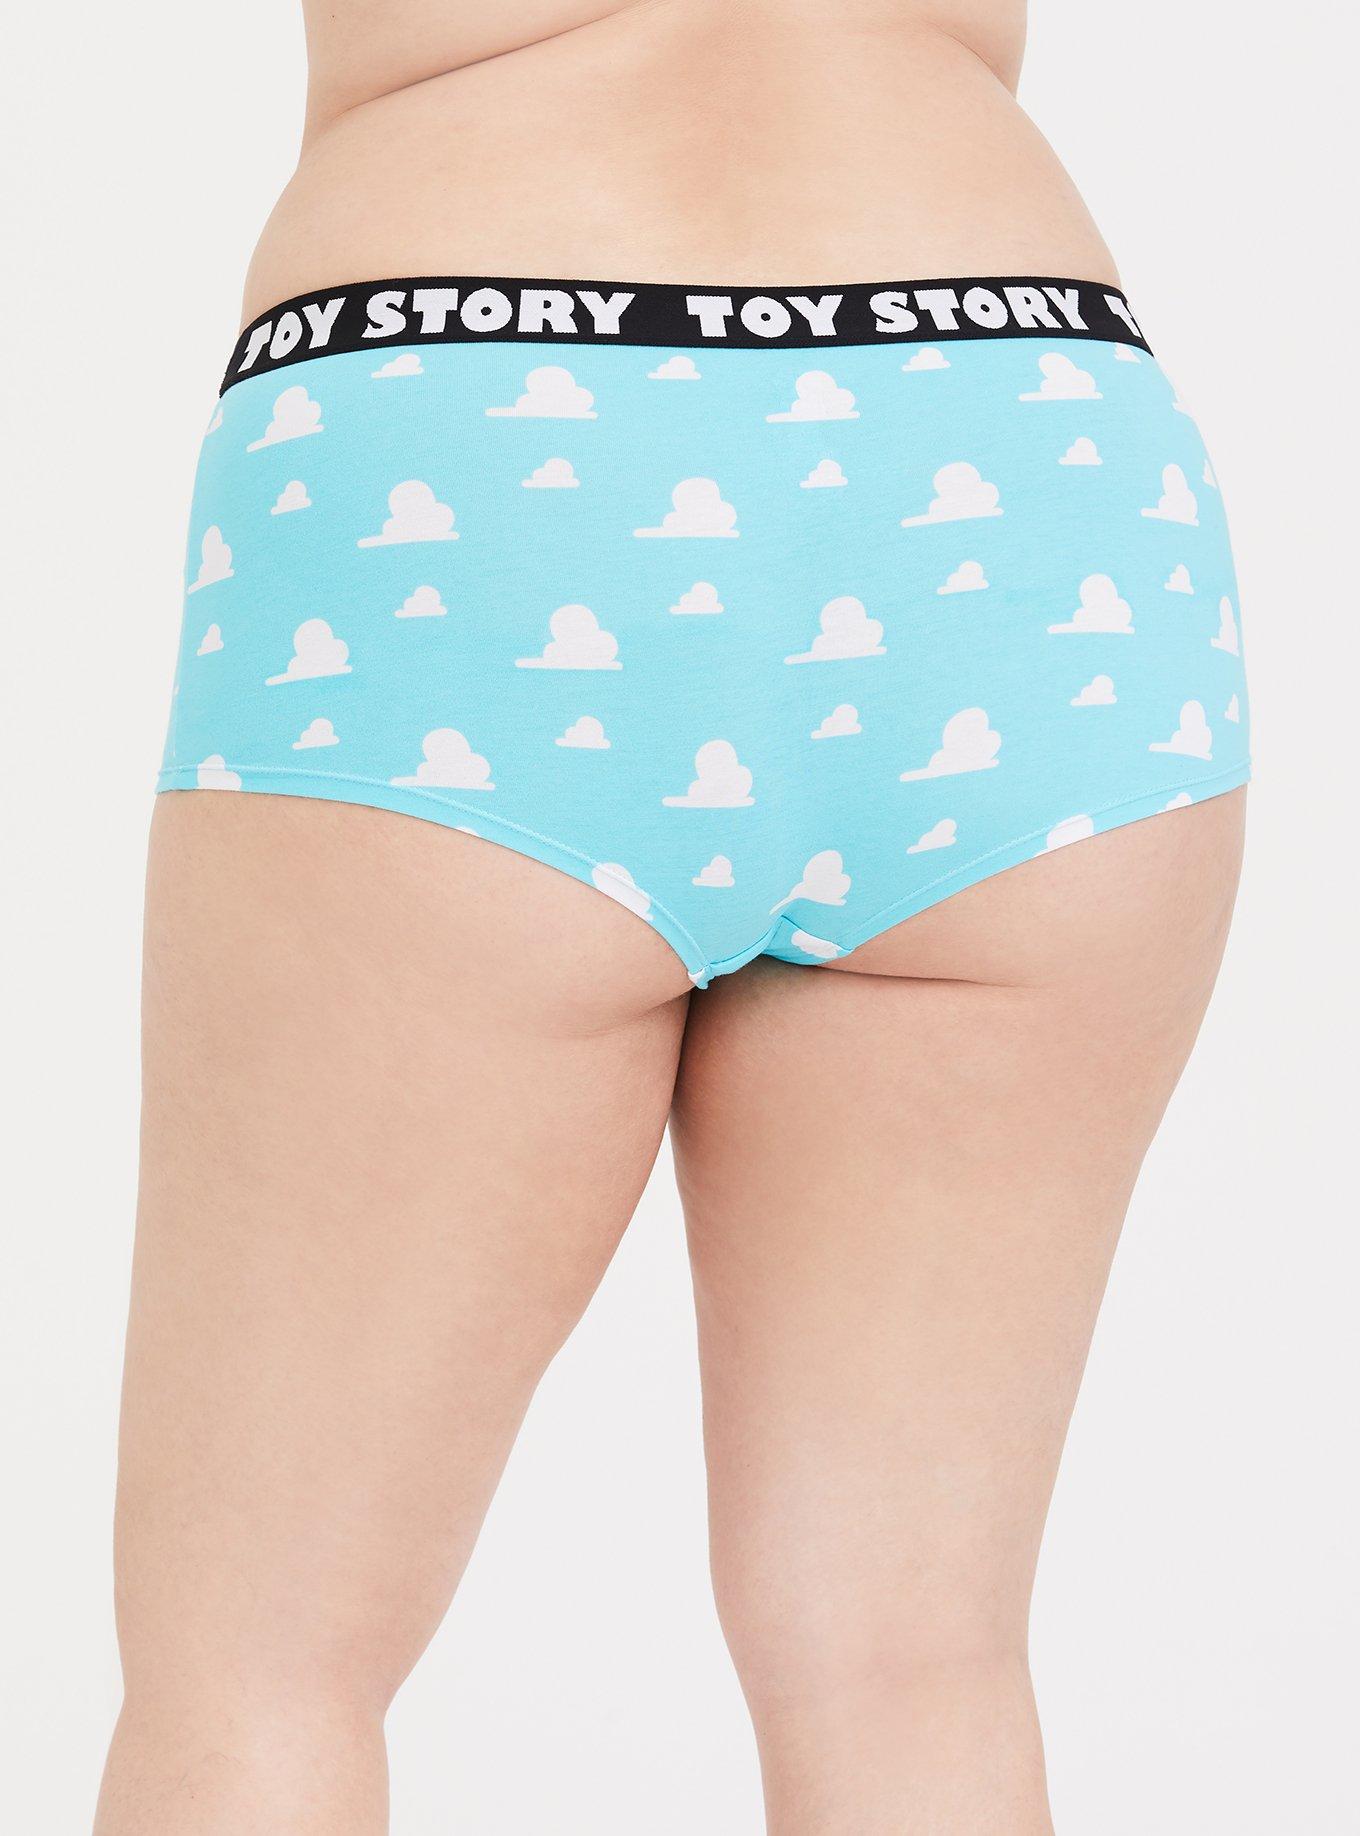 Plus Size - Disney Frozen 2 Olaf Fair Isle Navy Cotton Boyshort Panty -  Torrid